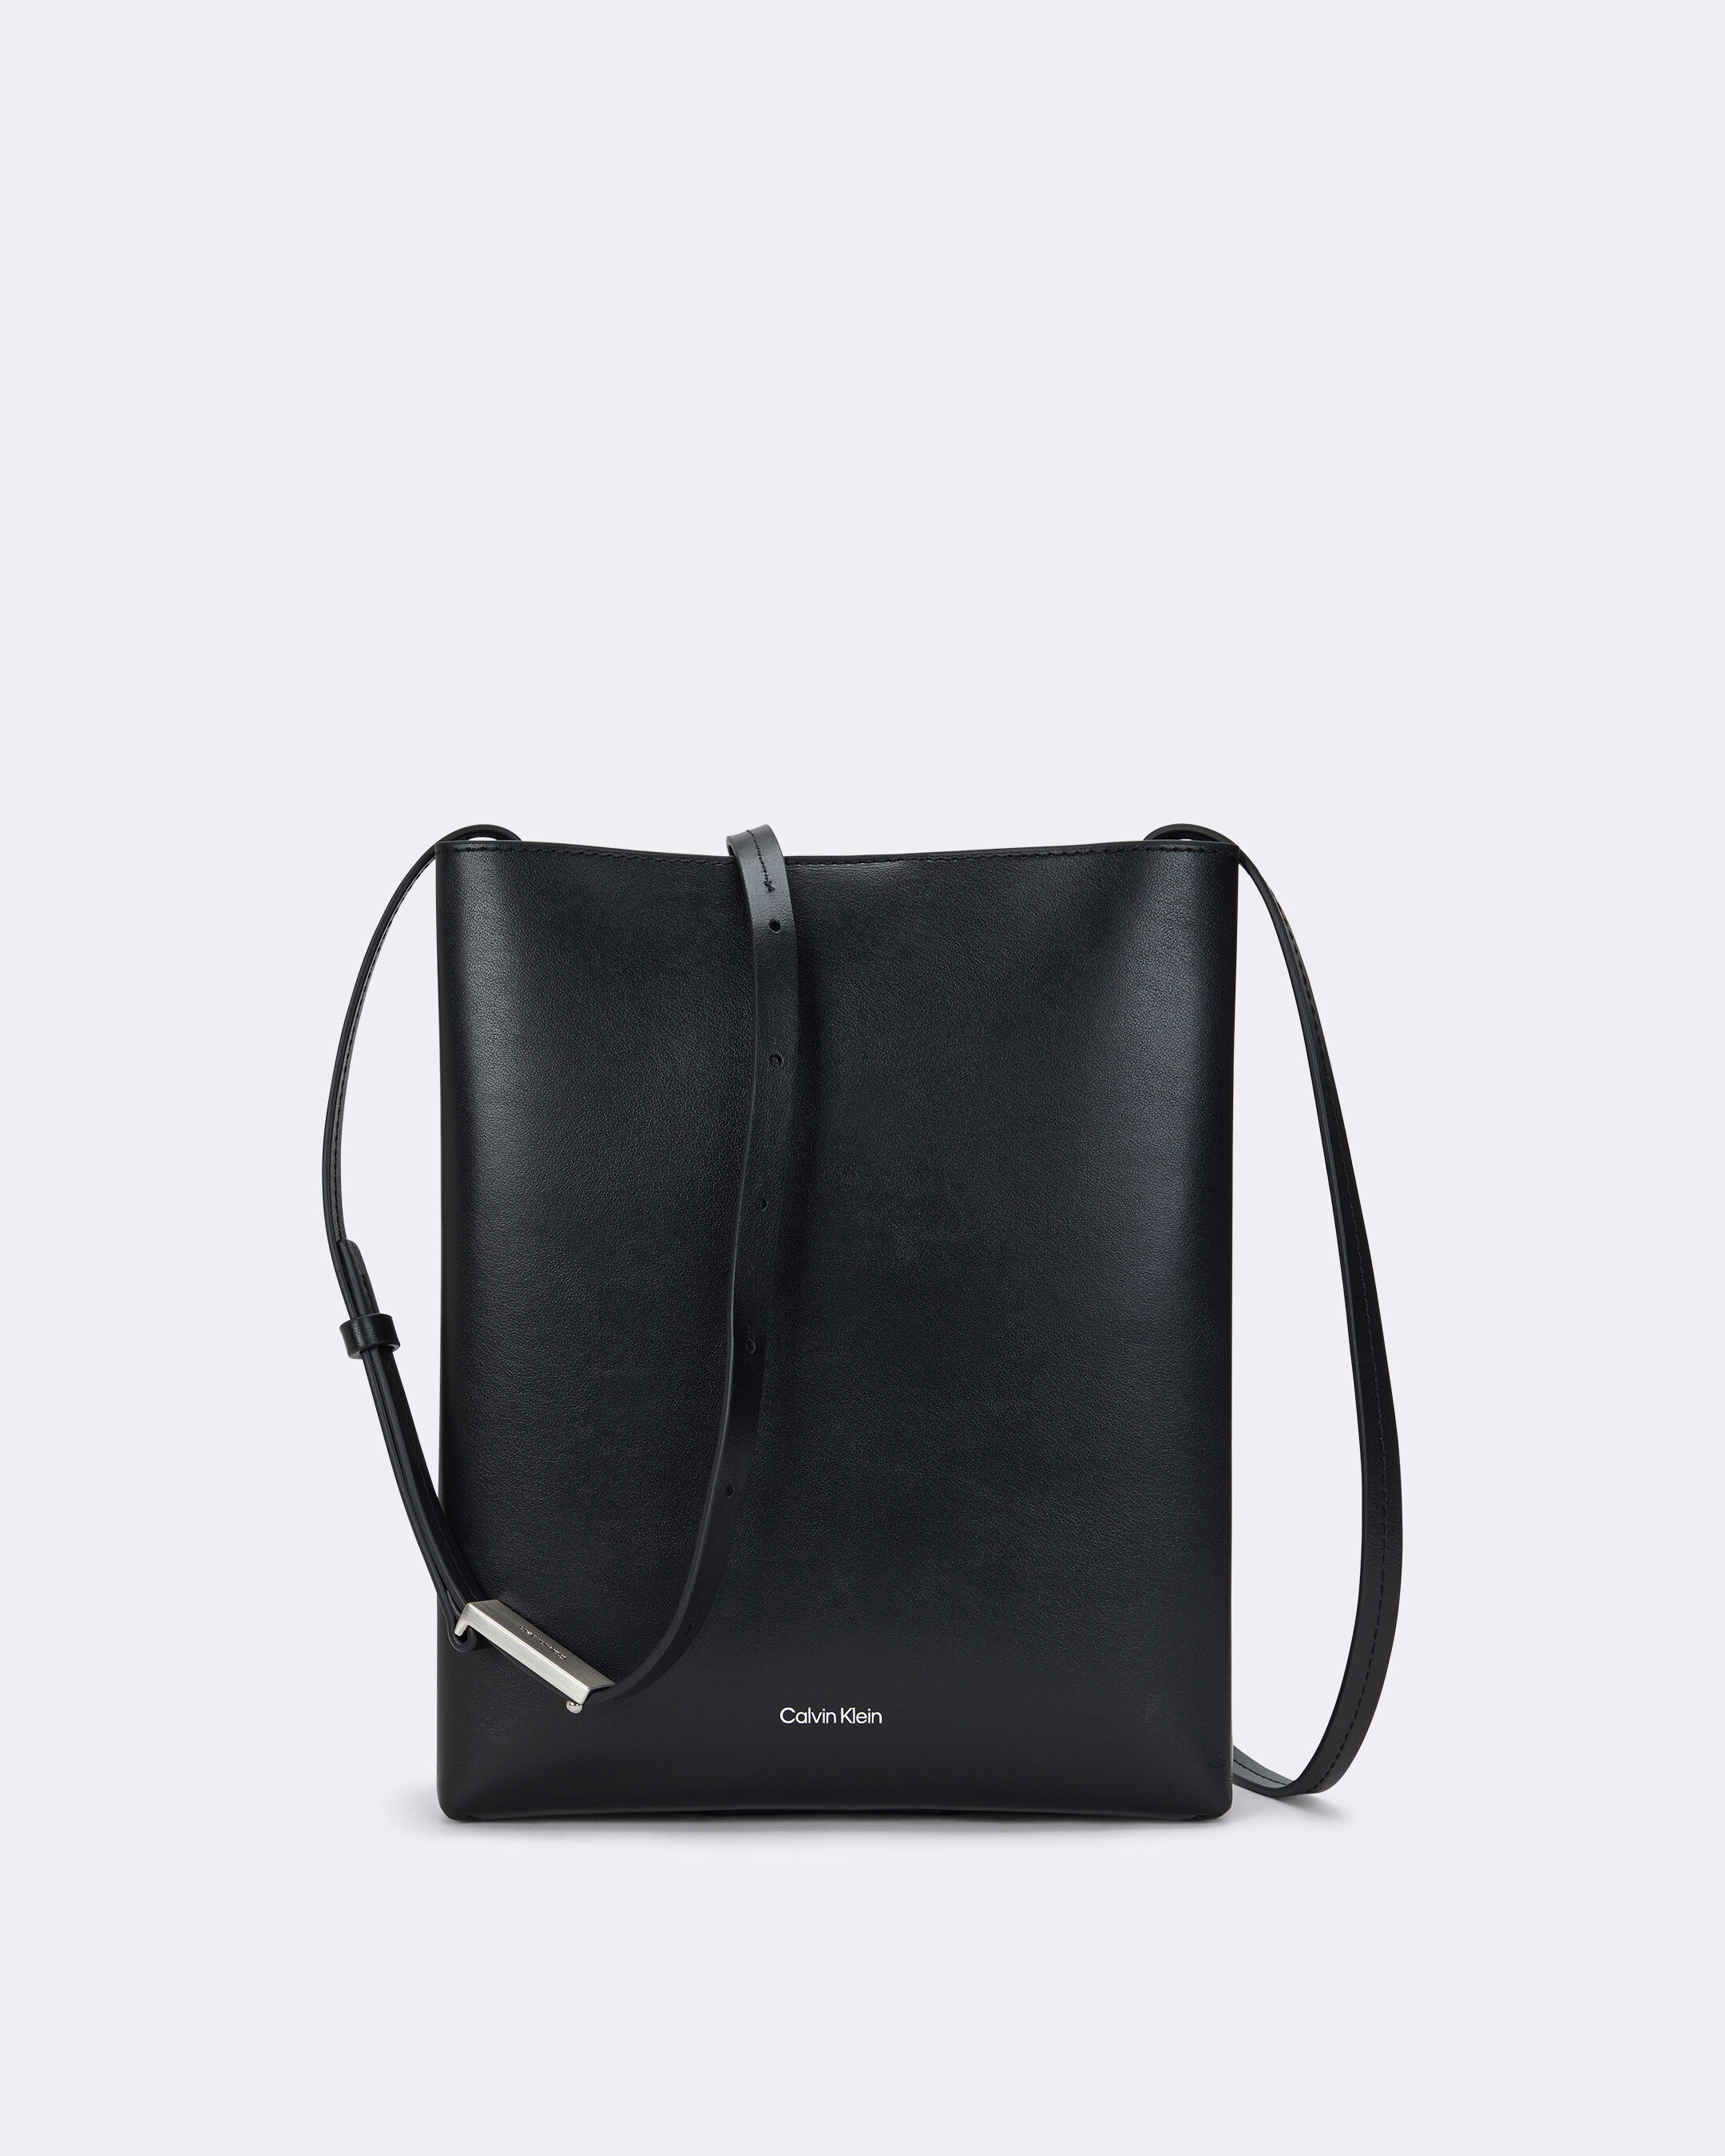 Calvin Klein bags | Shop Calvin Klein bags online at GIGLIO.COM